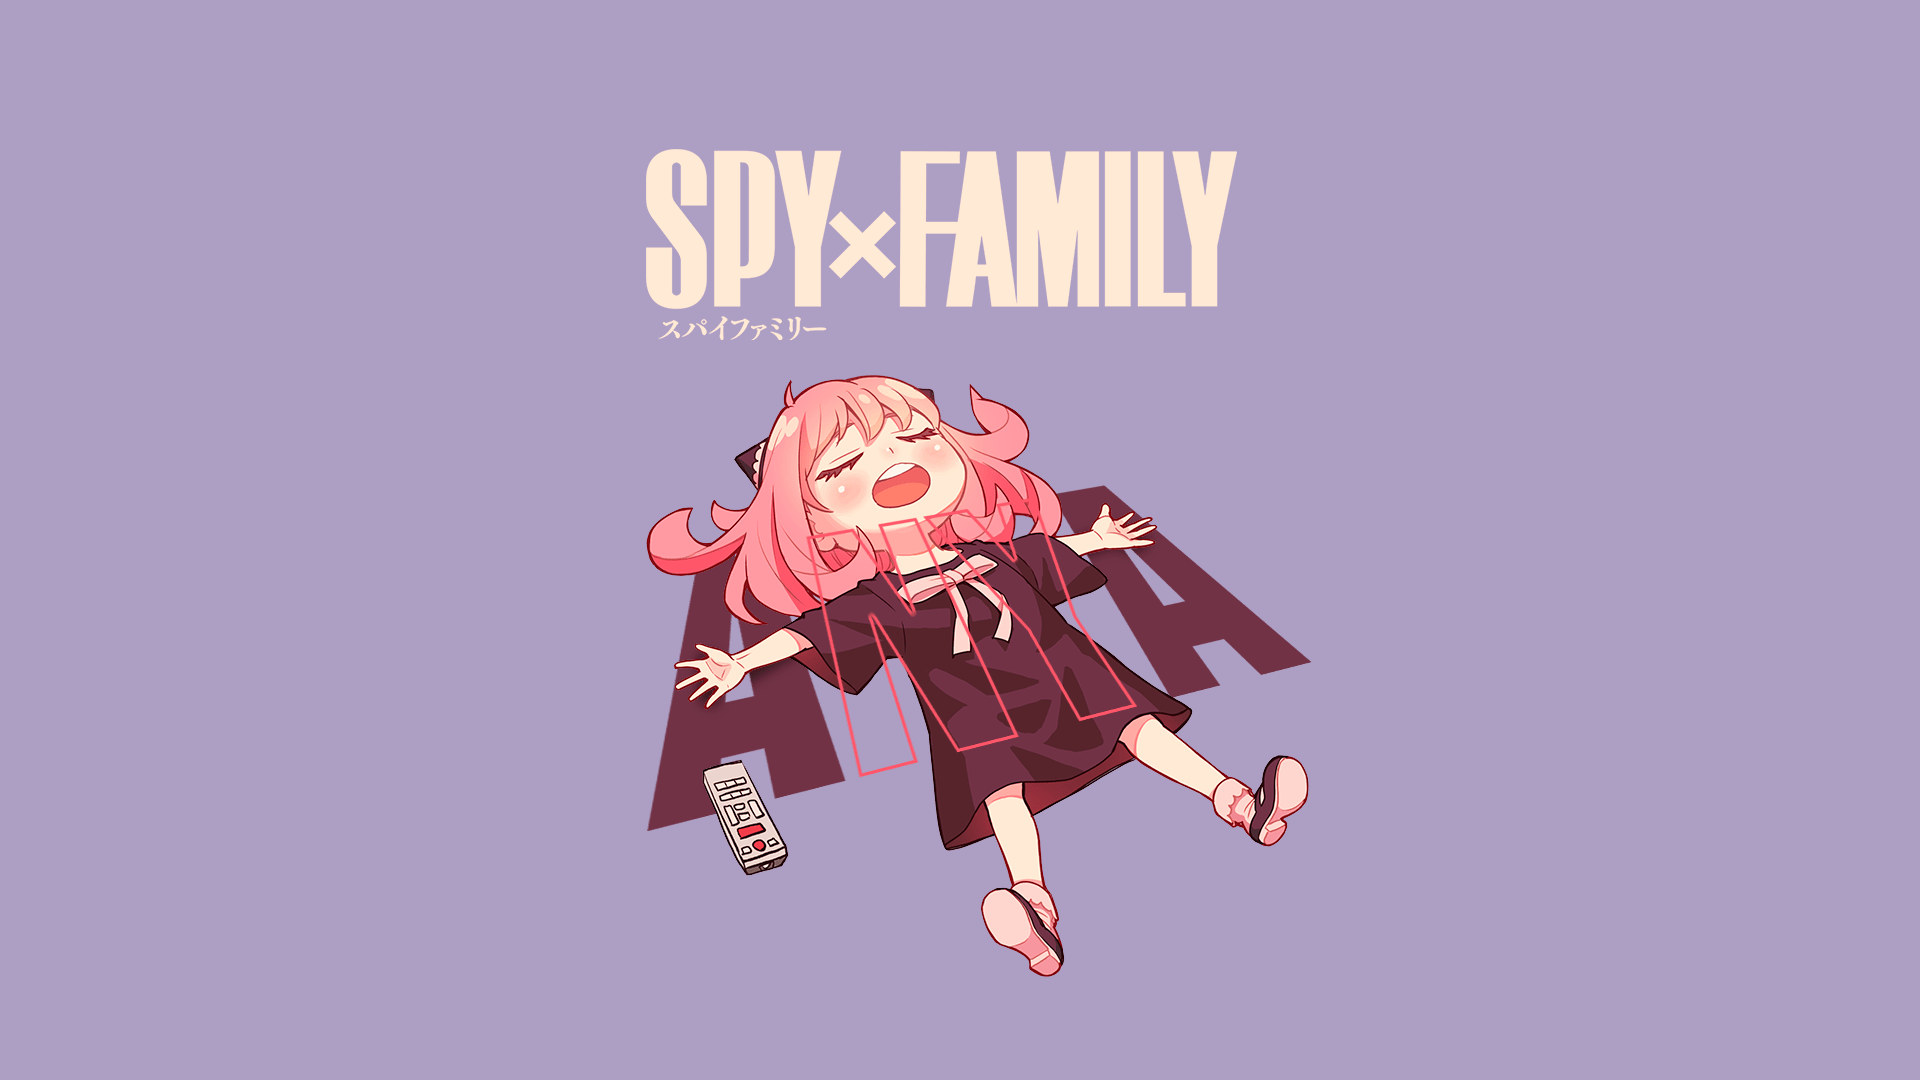 Spy X Family Anime Anya Forger Cute Jumbo Badge - $4.99 - The Mad Shop